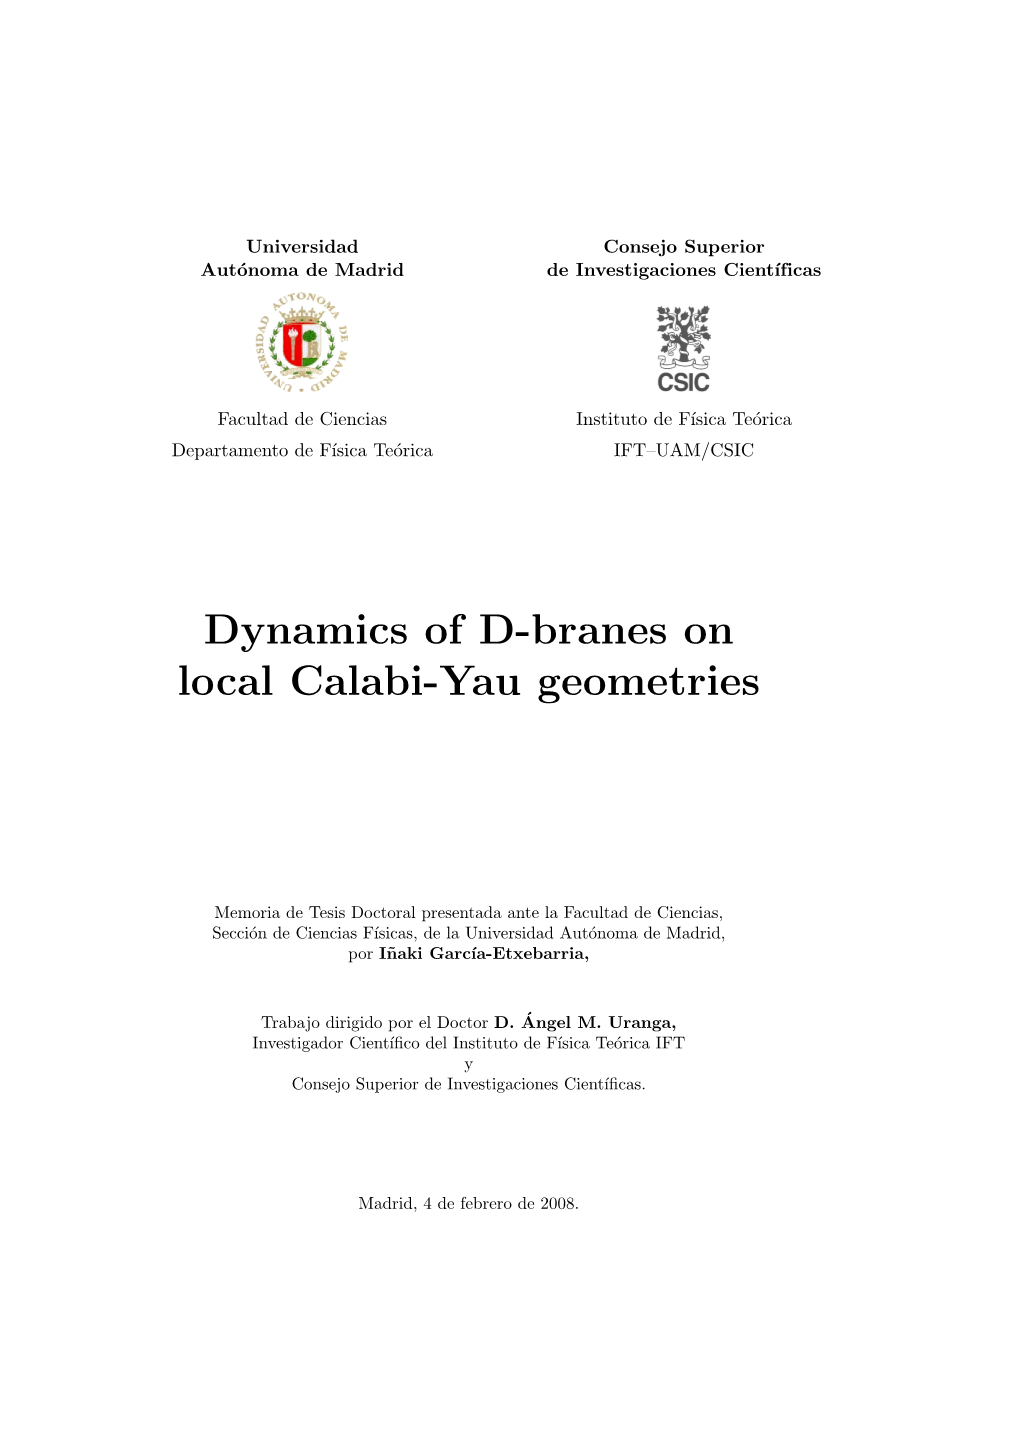 Dynamics of D-Branes on Local Calabi-Yau Geometries